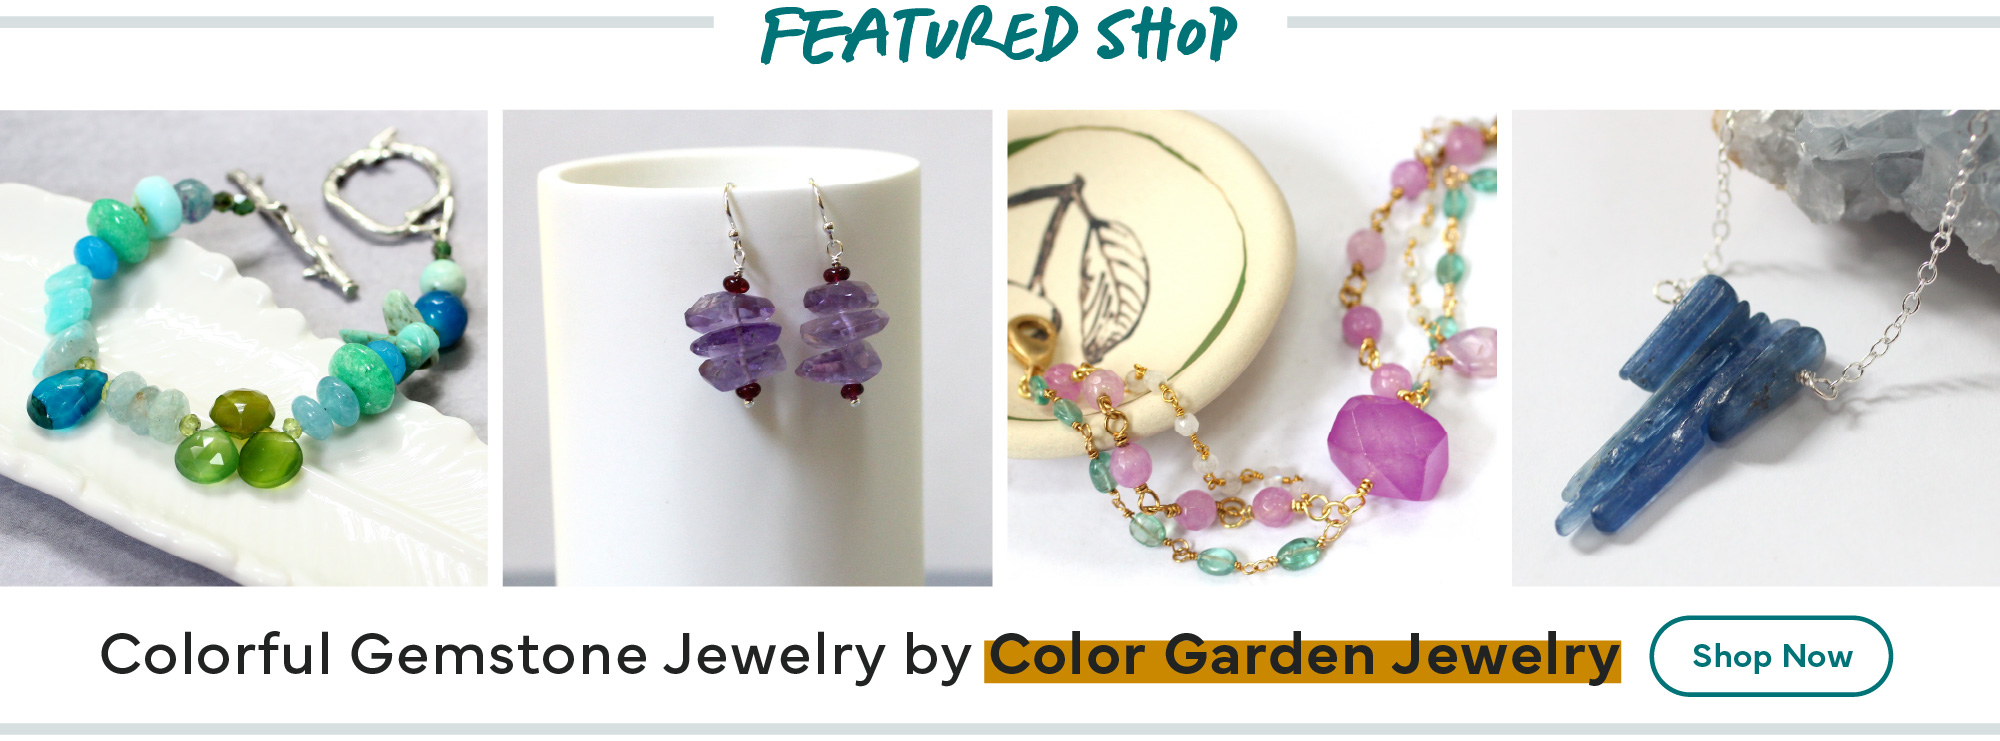 Colorful Gemstone Jewelry